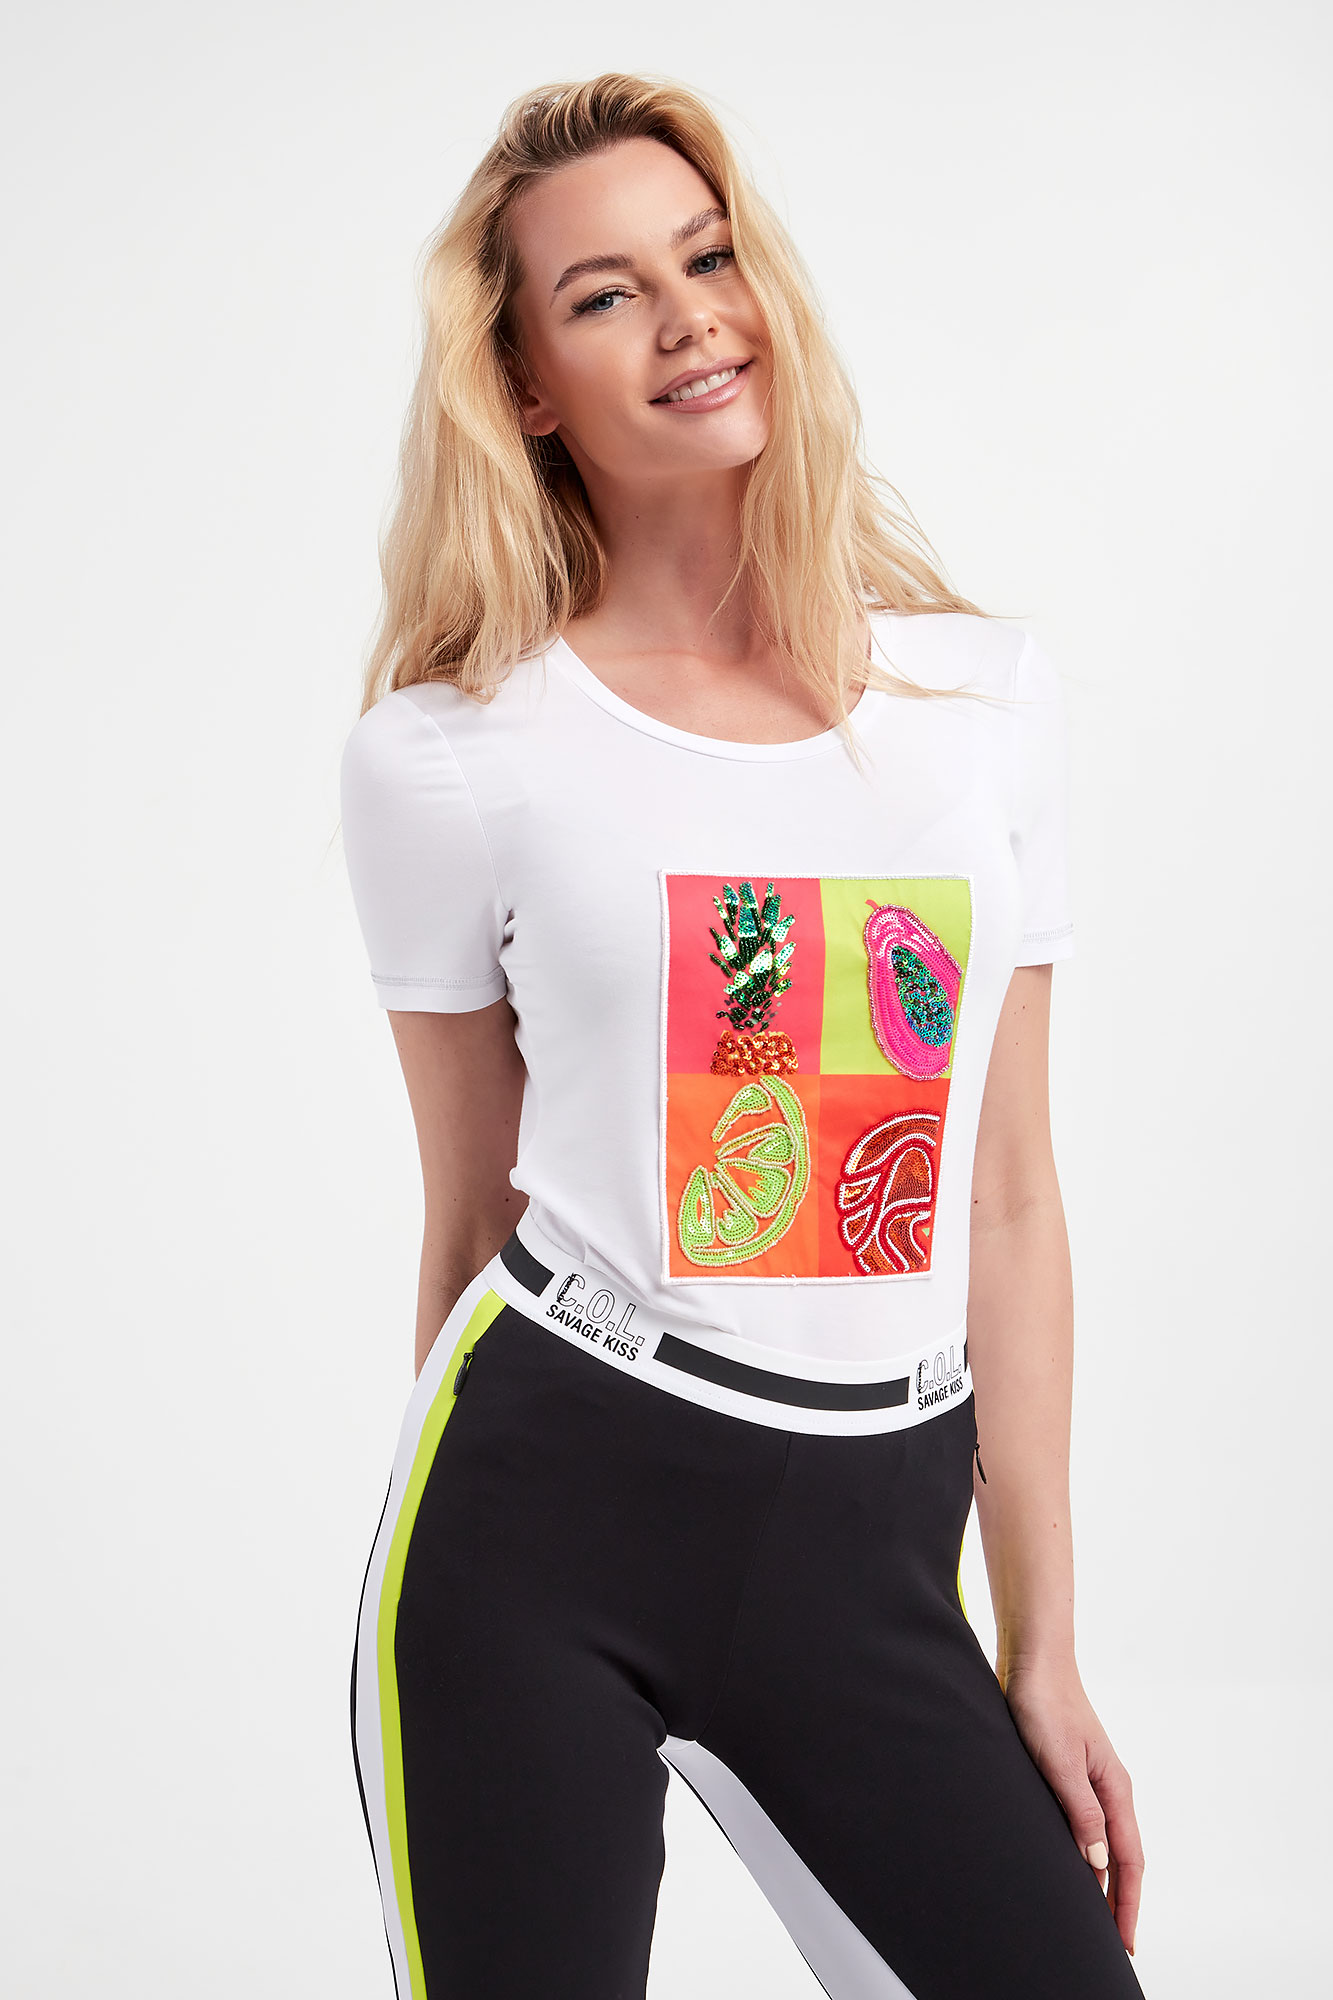 T-shirt Leesha SPORTALM rozmiar 40 (roz. polski 36) – 64668-178